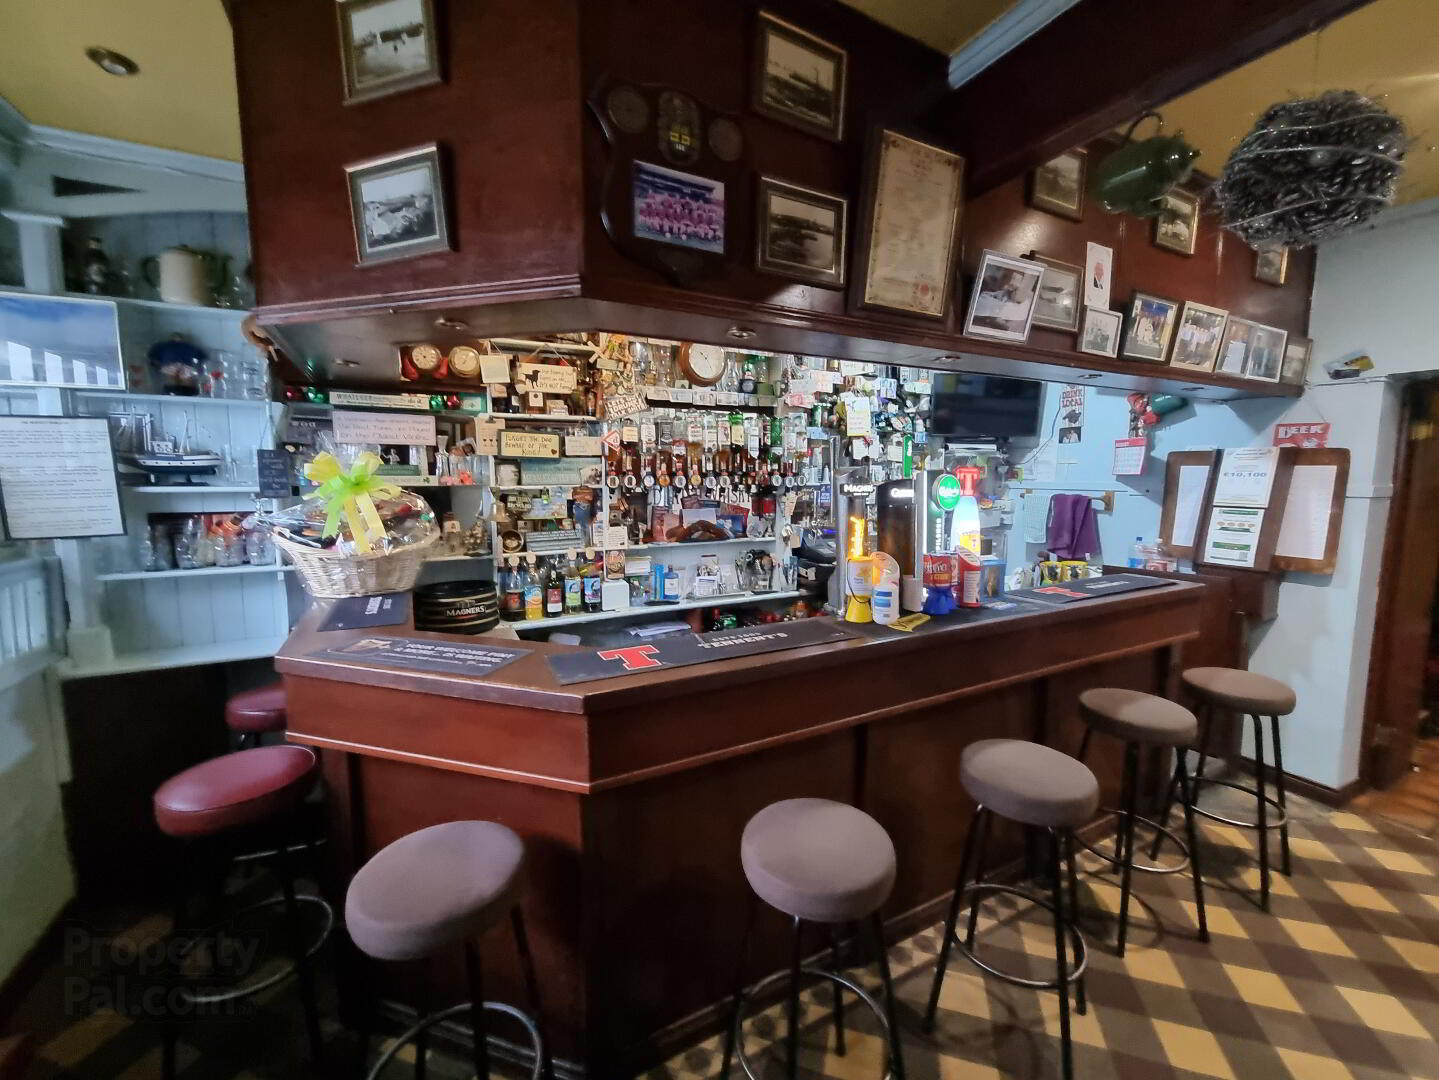 Patsy's Bar, 12 Greencastle Street